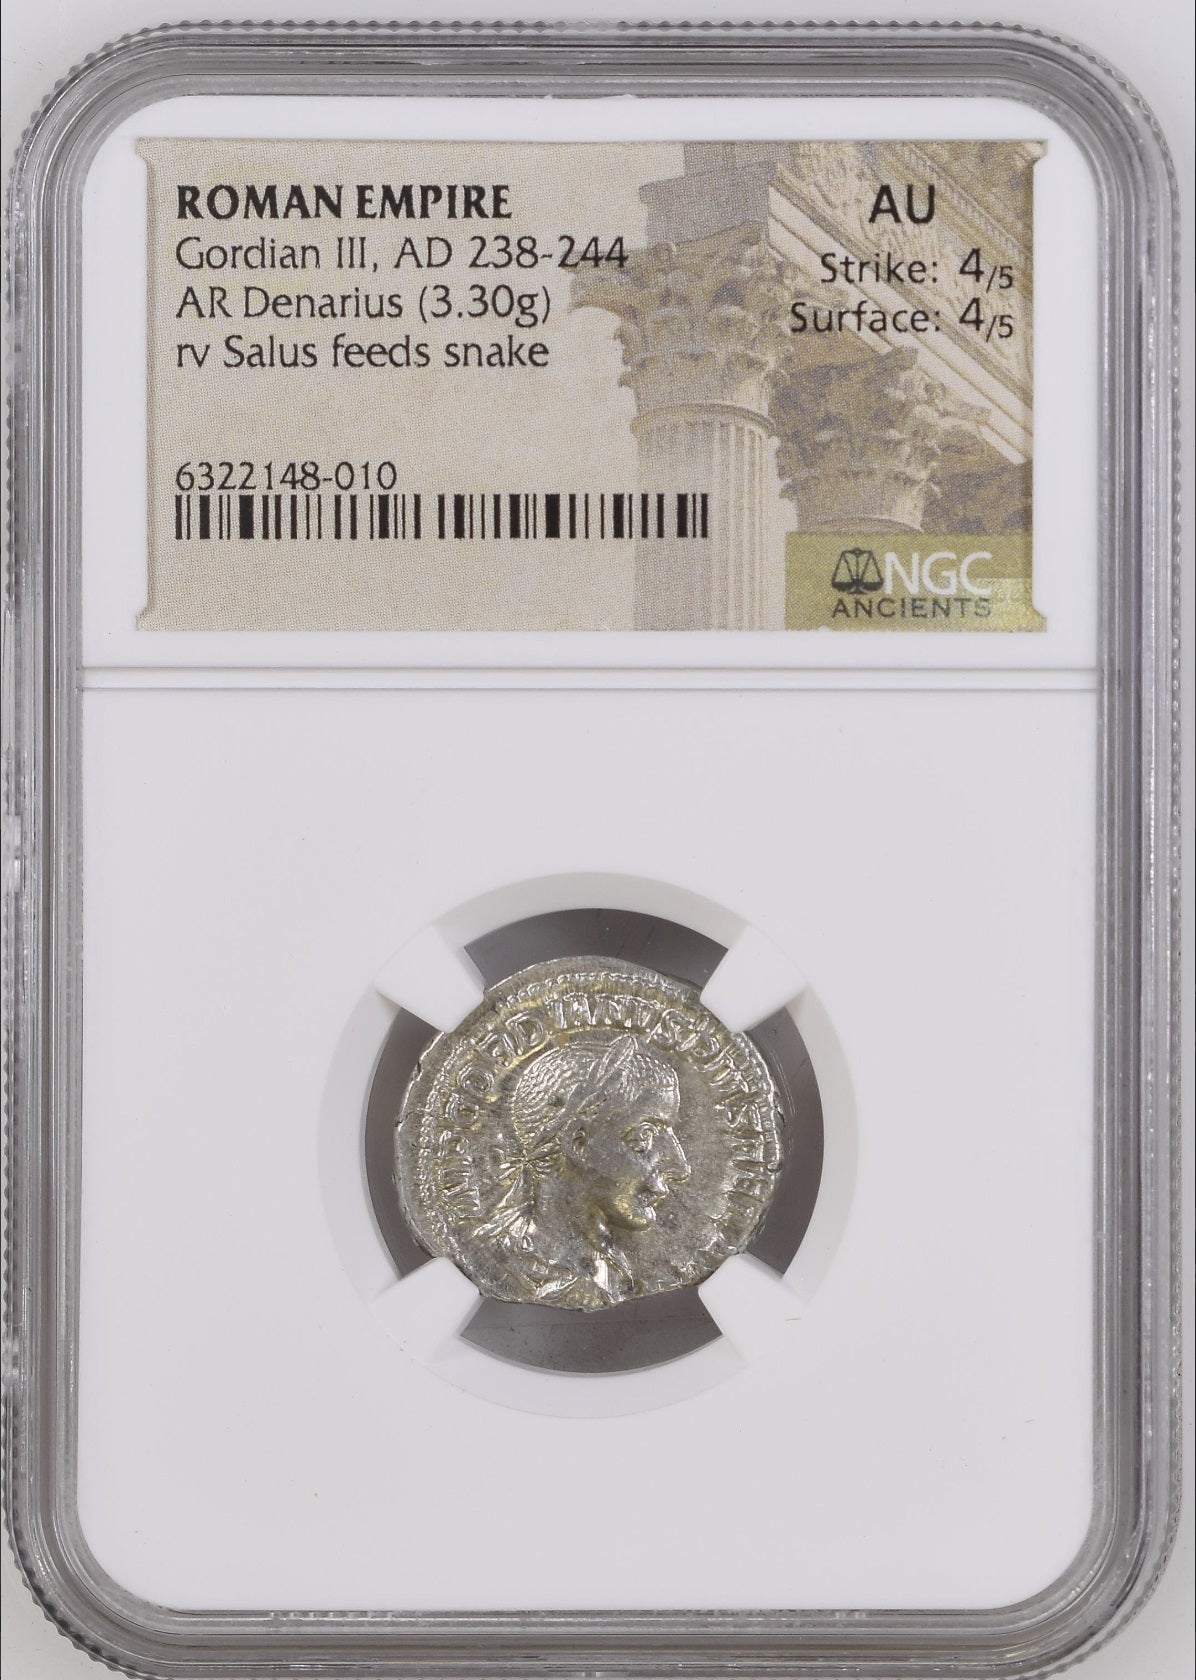 Roman Empire - Gordian III - Silver Denarius - NGC AU - Cohen:325